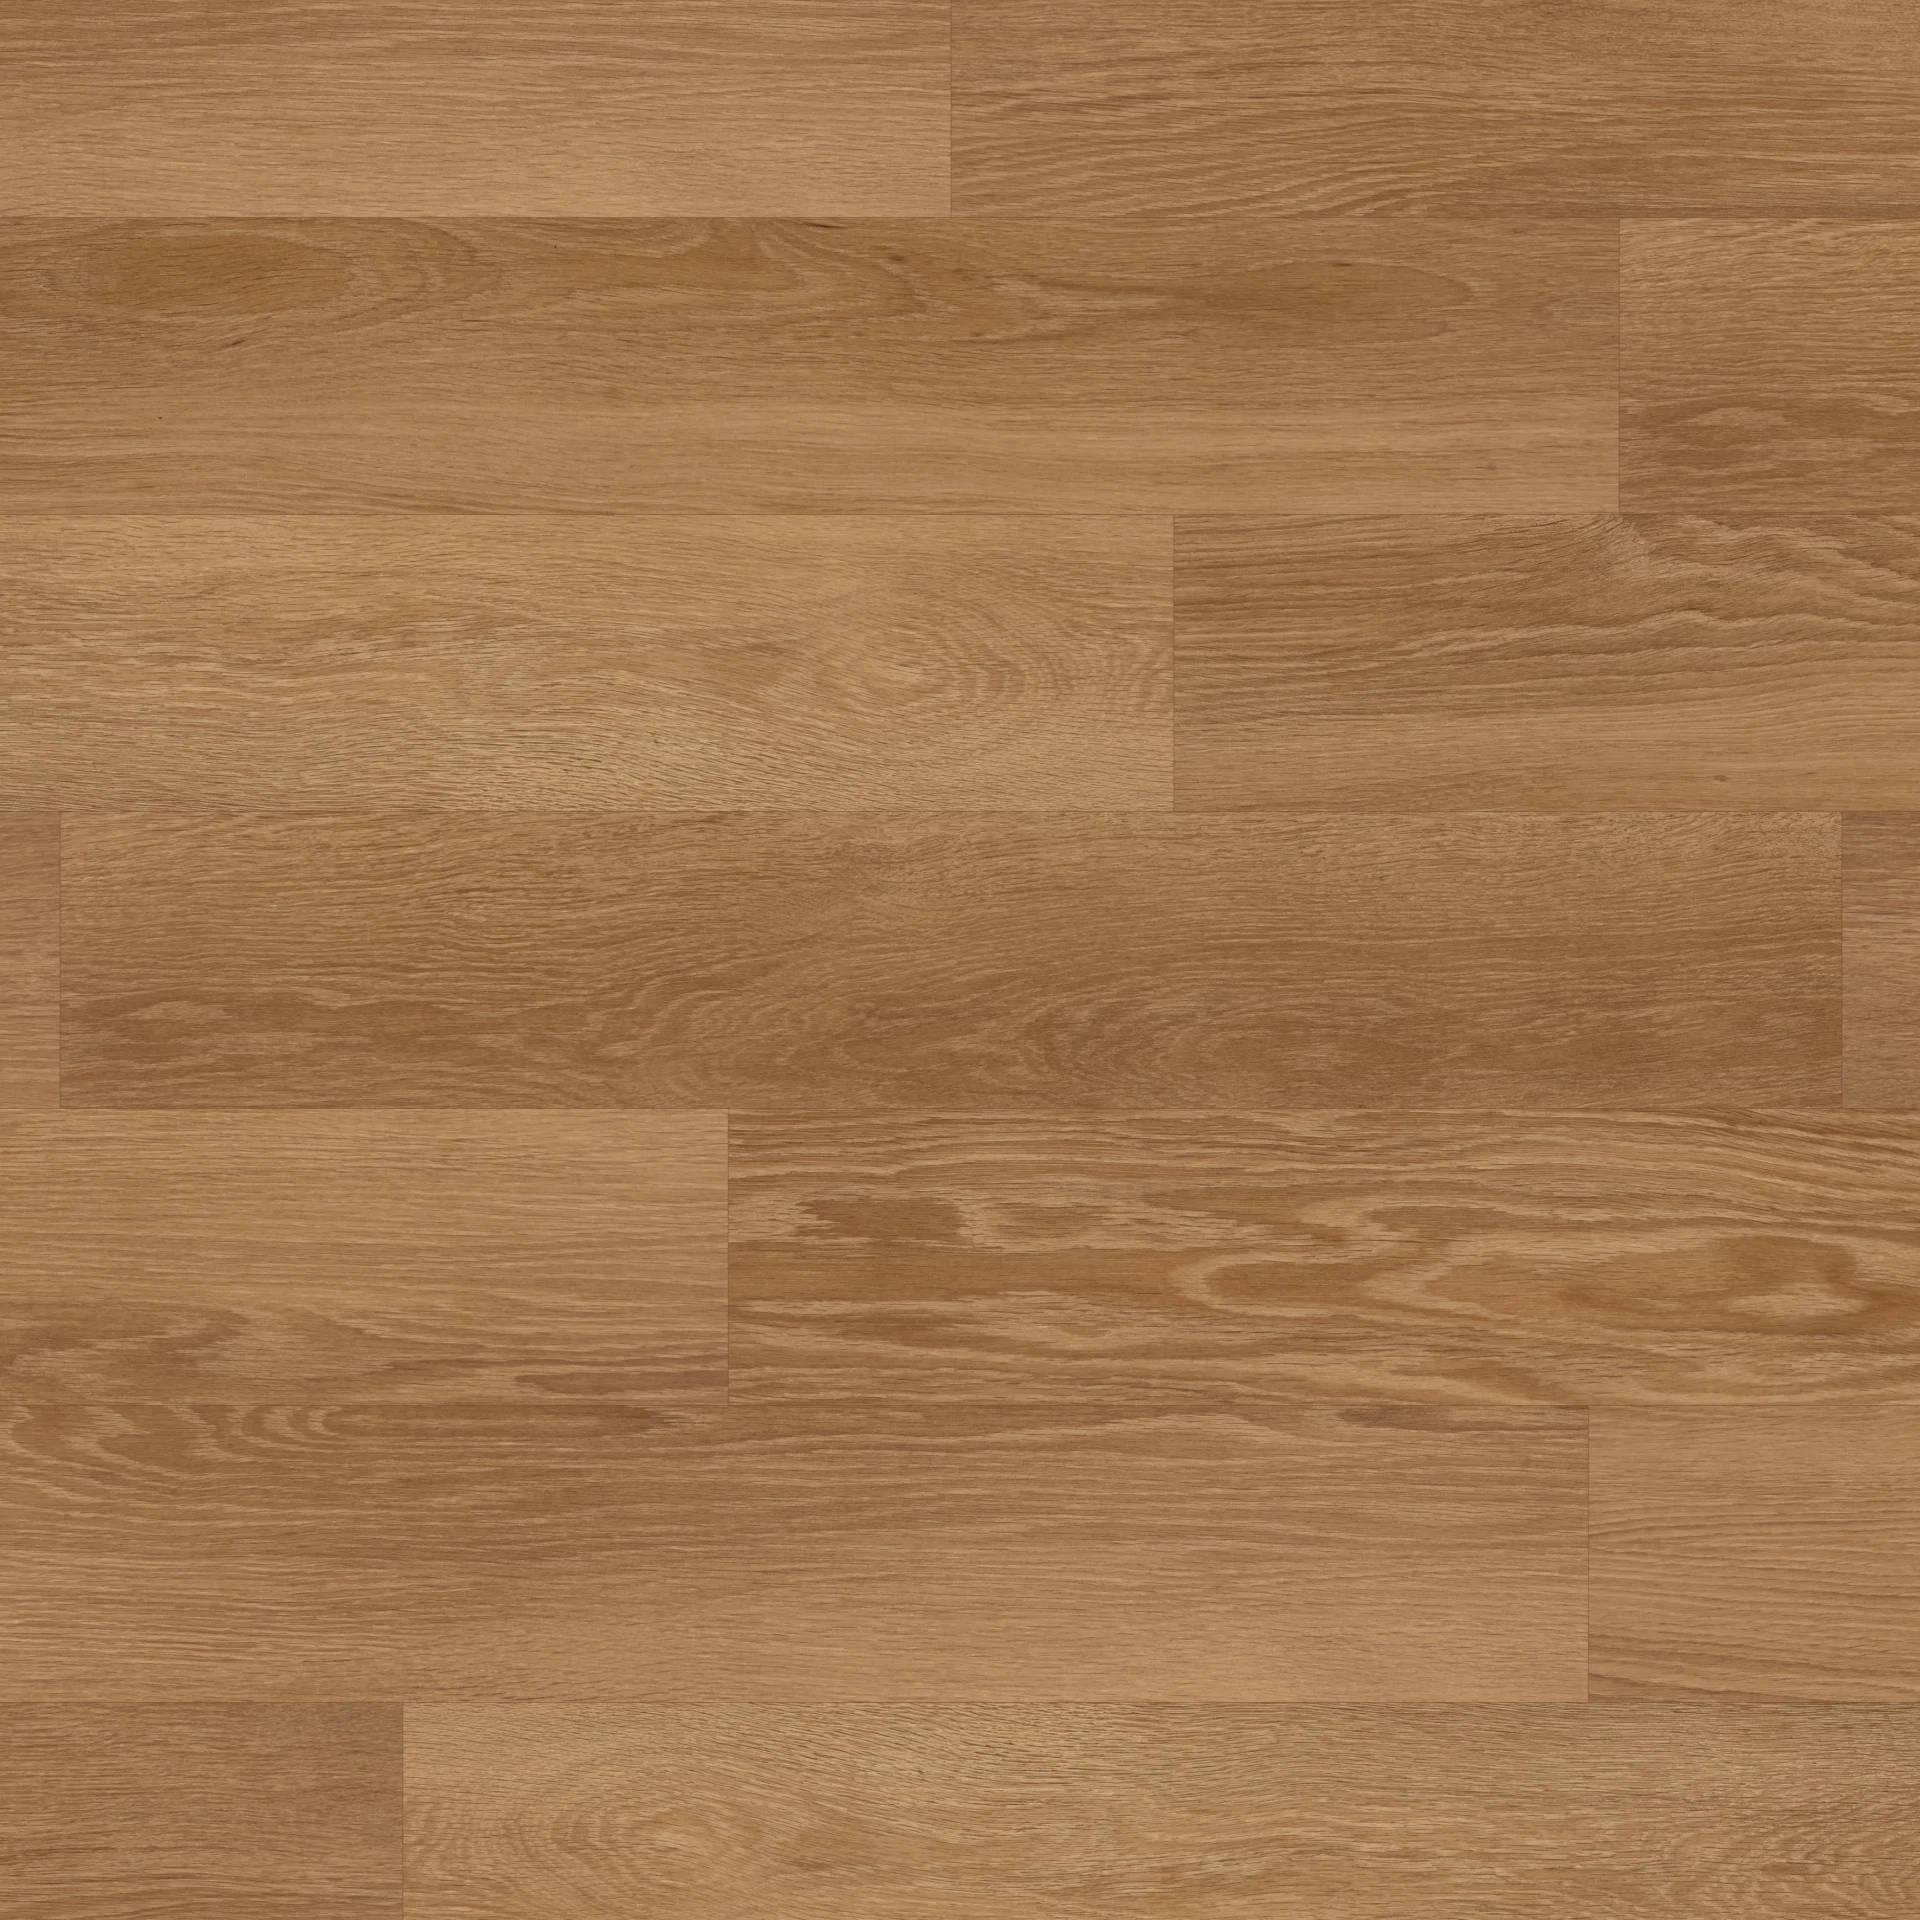 Karndean Knight Tile - Honey Limed Oak KP155 Safety Flooring